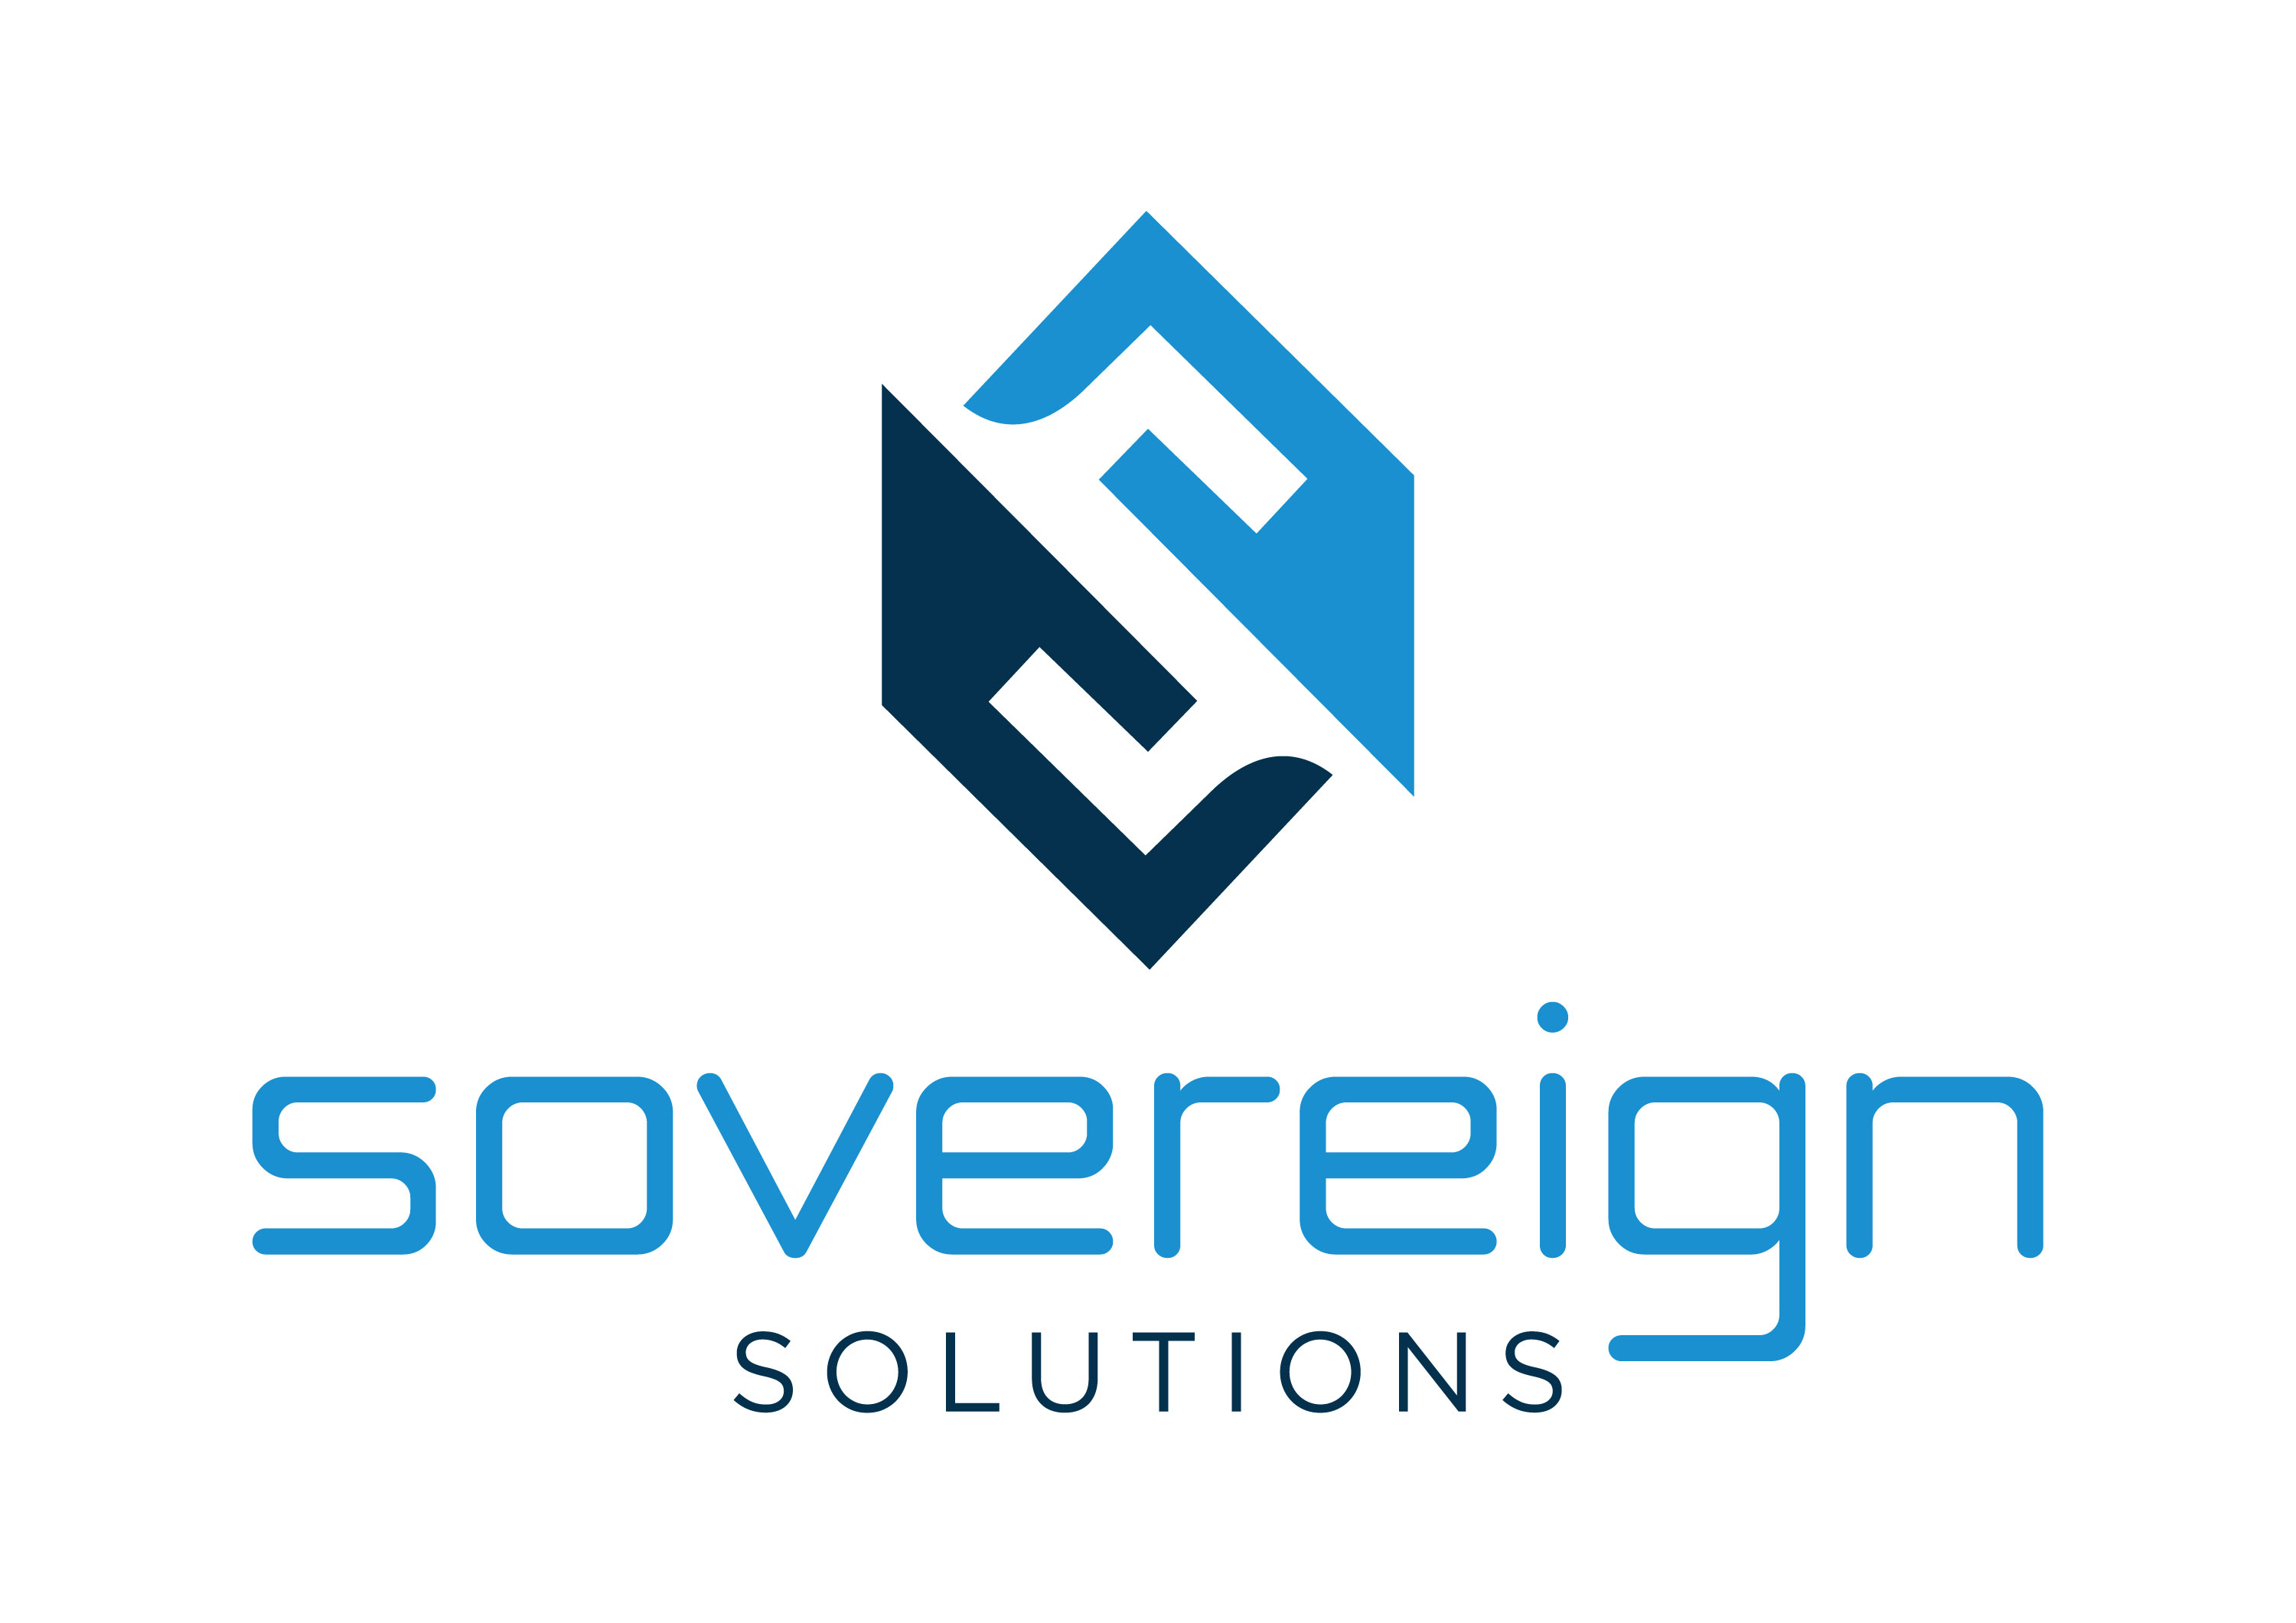 Sovereign Solutions Pte Ltd in Elioplus